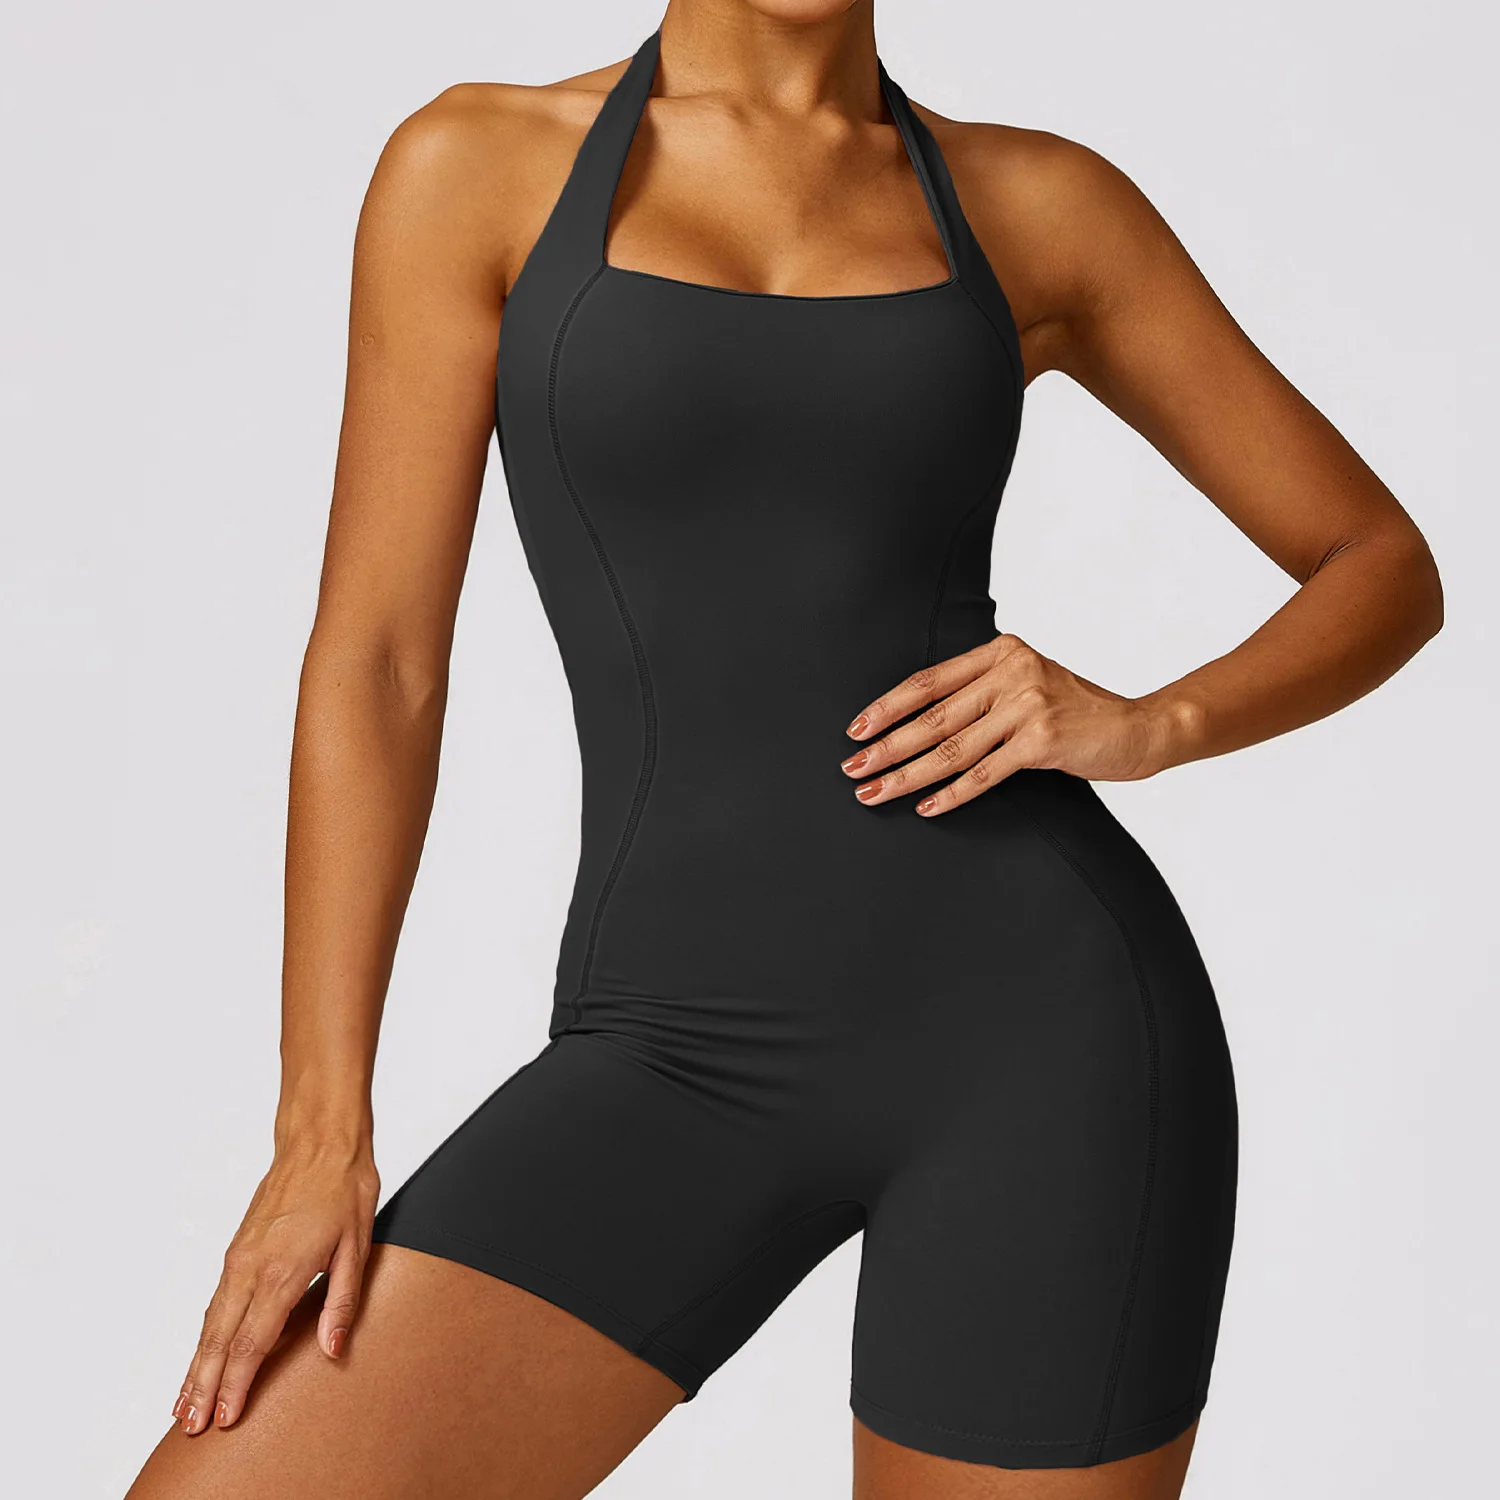 One Piece Summer Black Jumpsuit For Gym Sportswear Women Yoga Exciese Active Sport Workout Jumpsuit